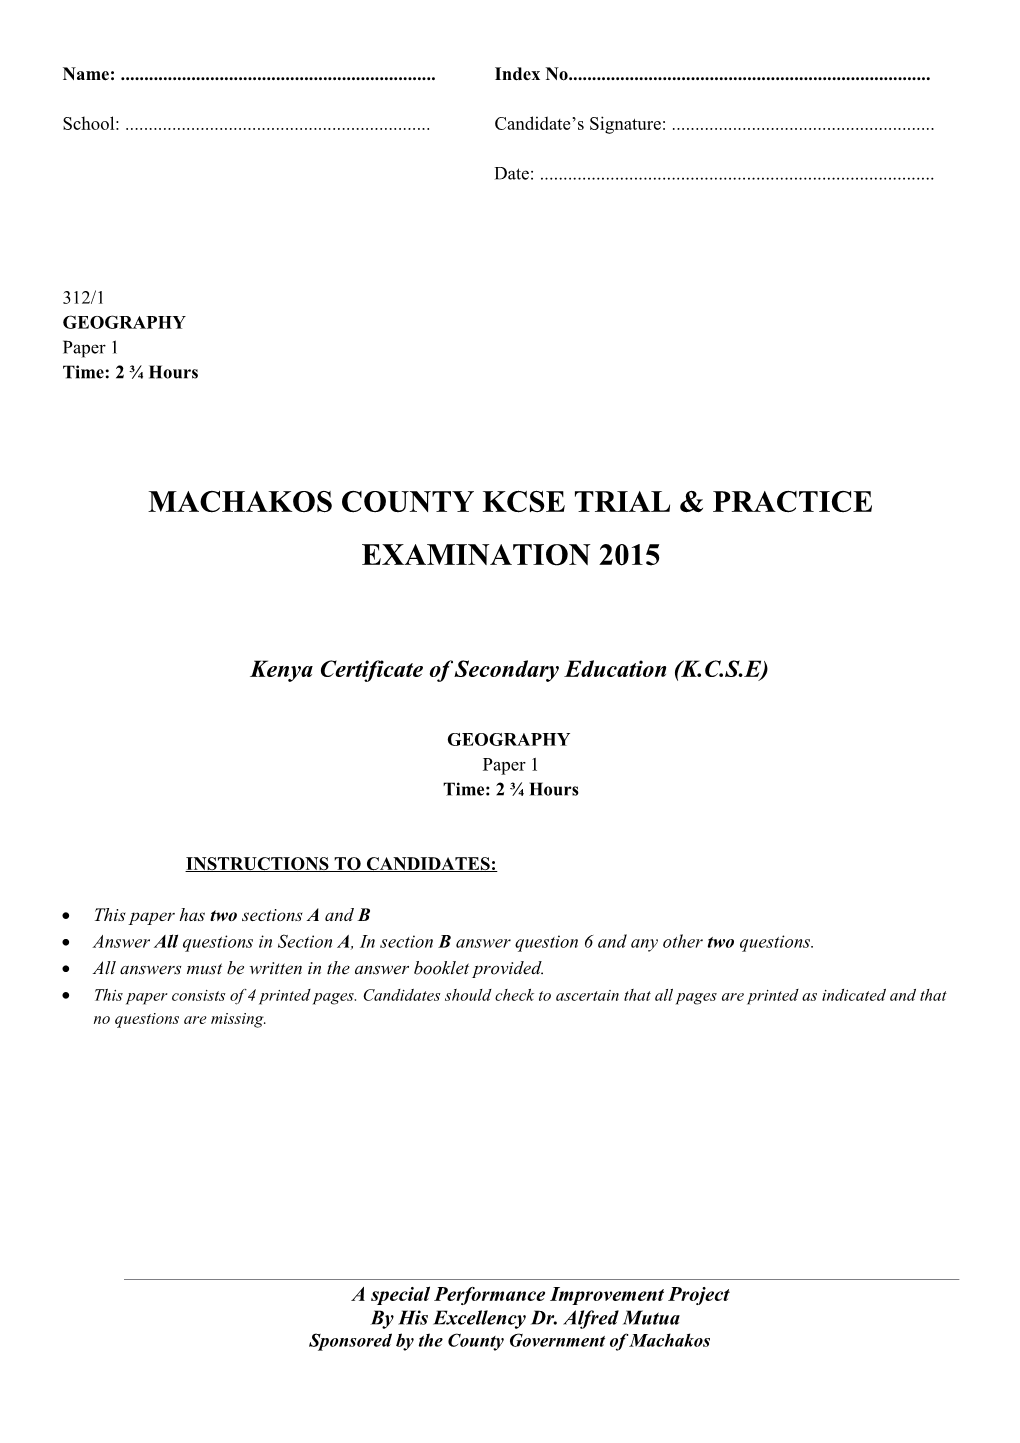 Machakos County Kcsetrial & Practice Examination 2015